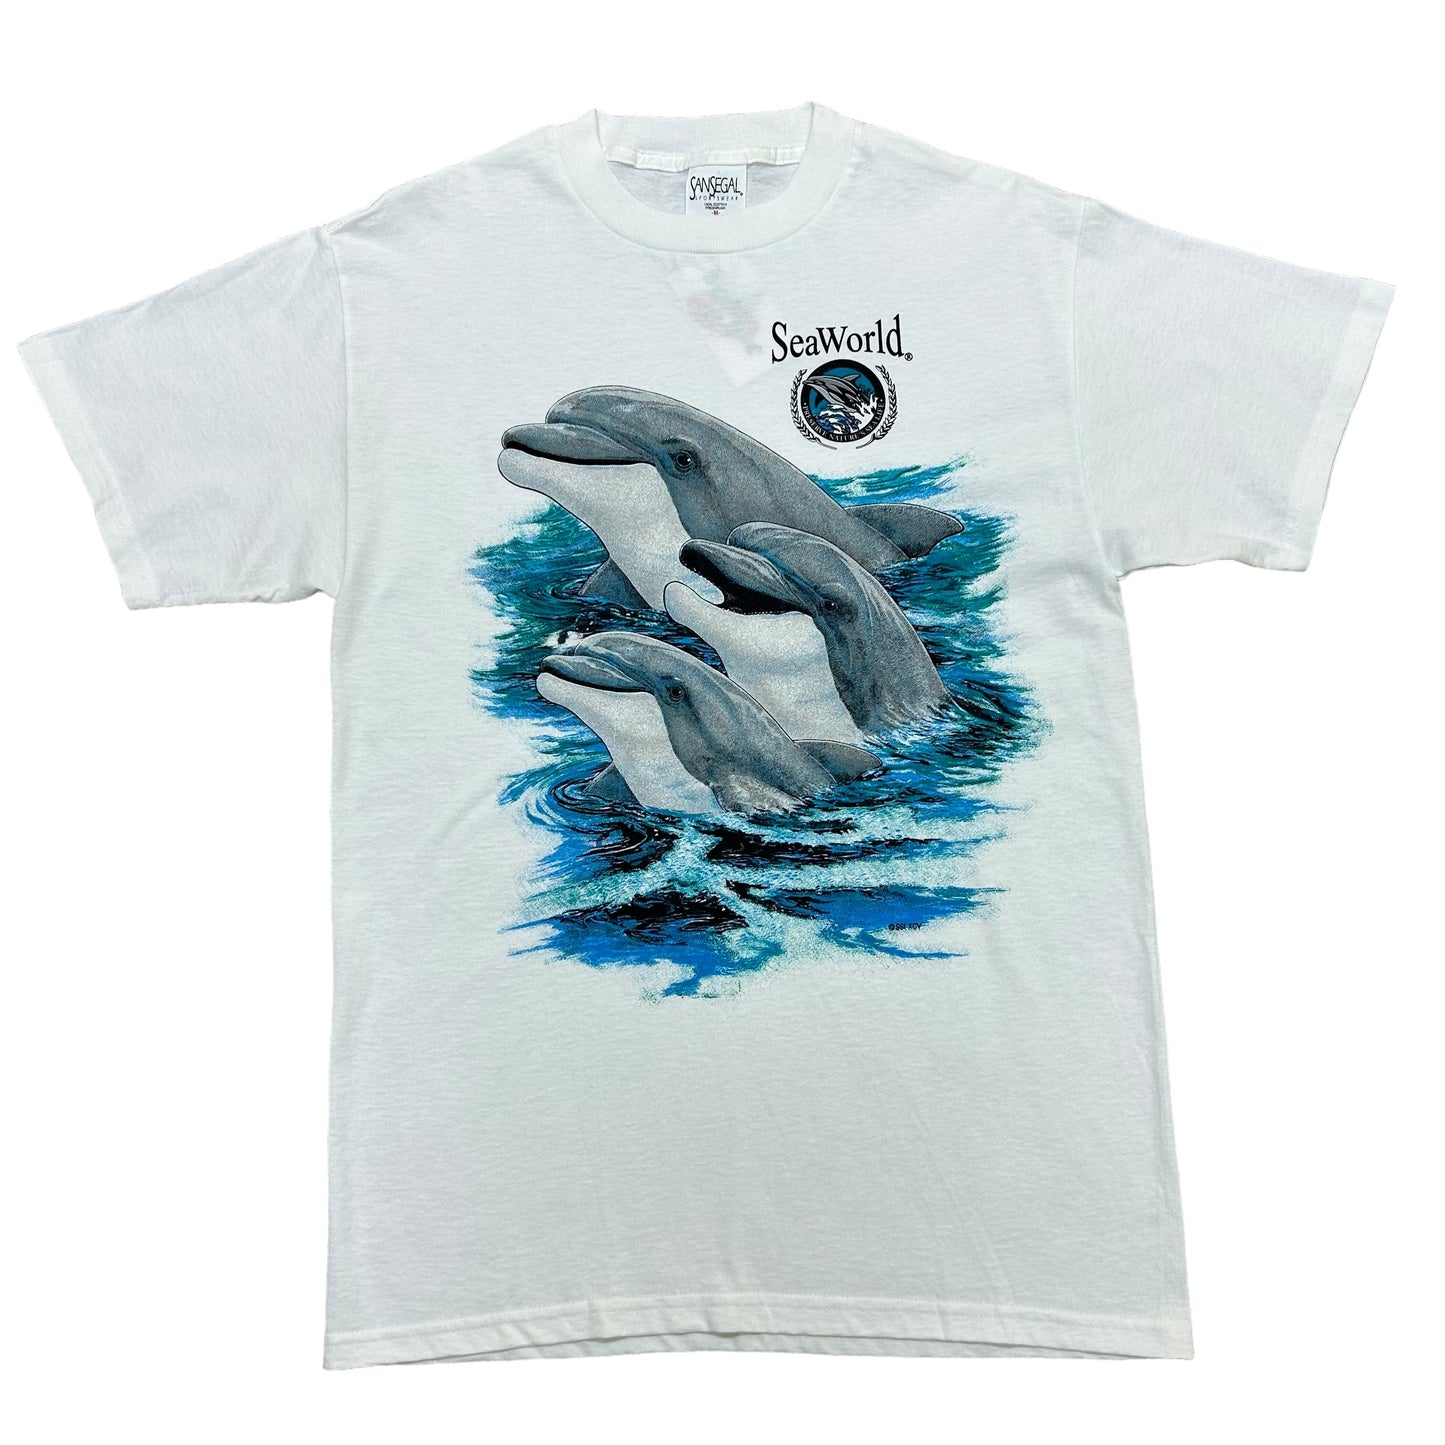 Vintage 1990s Sea World Dolphins White Graphic T-Shirt - Size Medium (Fits M/L)